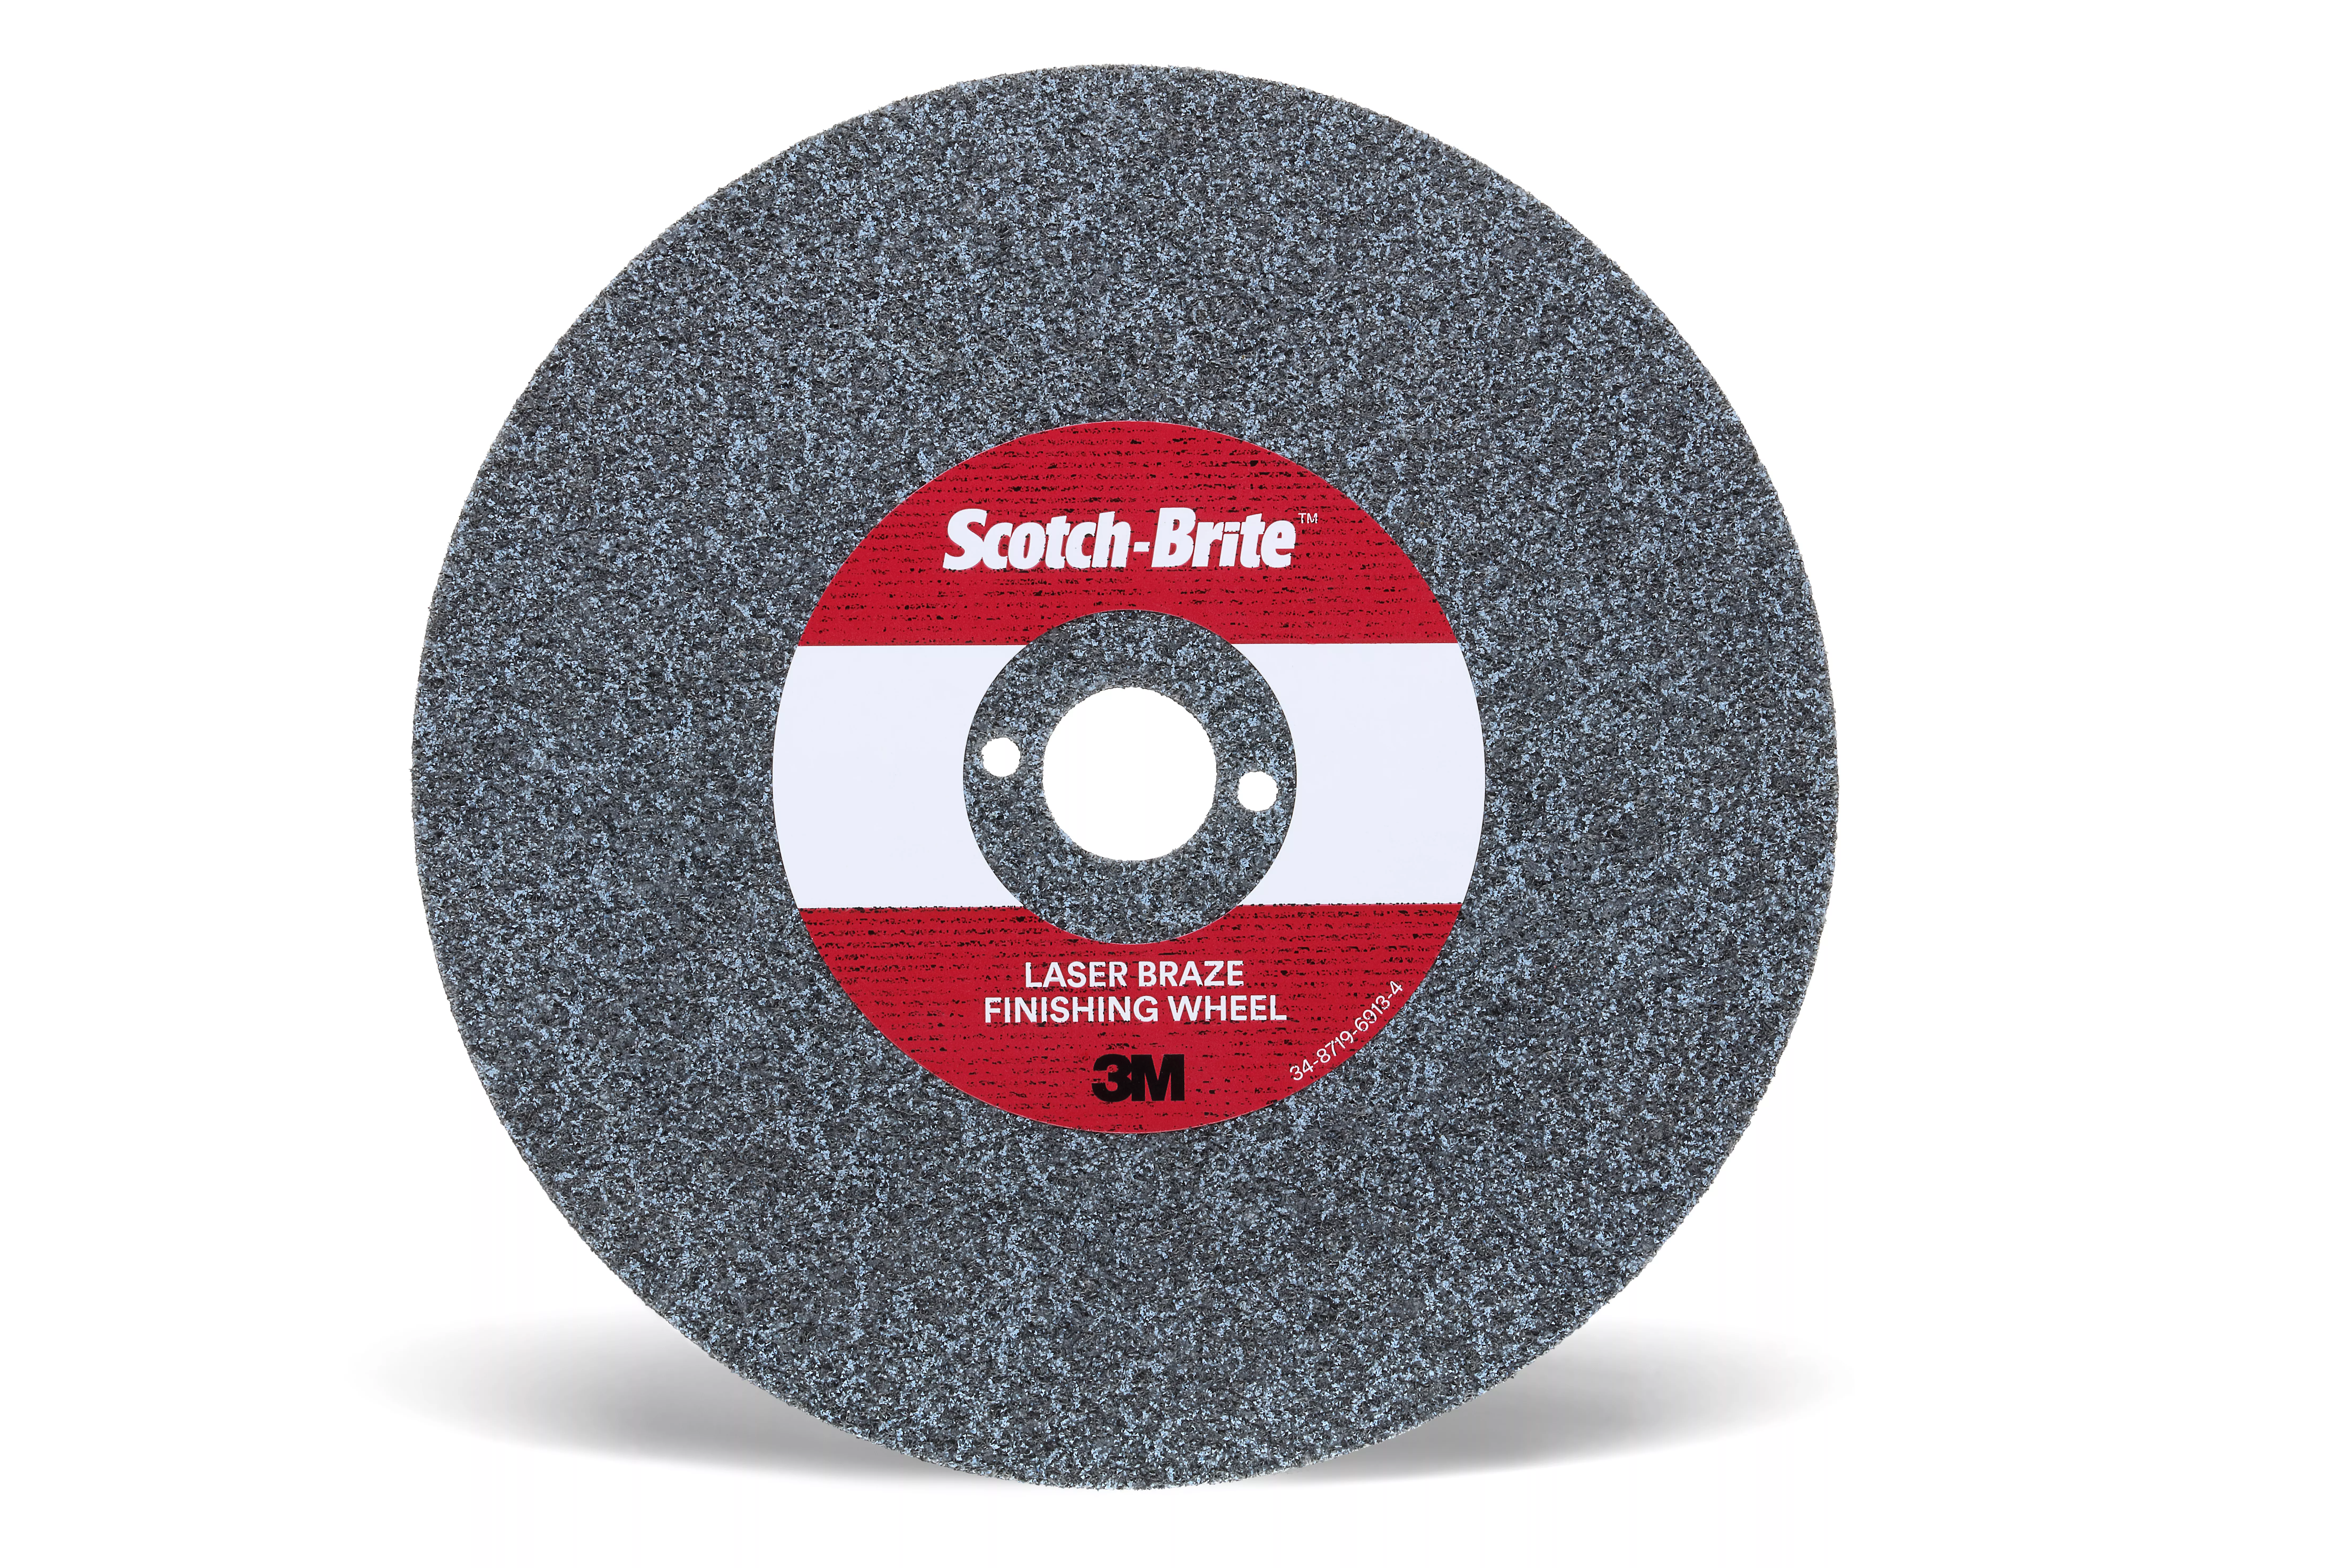 SKU 7100115937 | Scotch-Brite™ Laser Braze Finishing Wheel